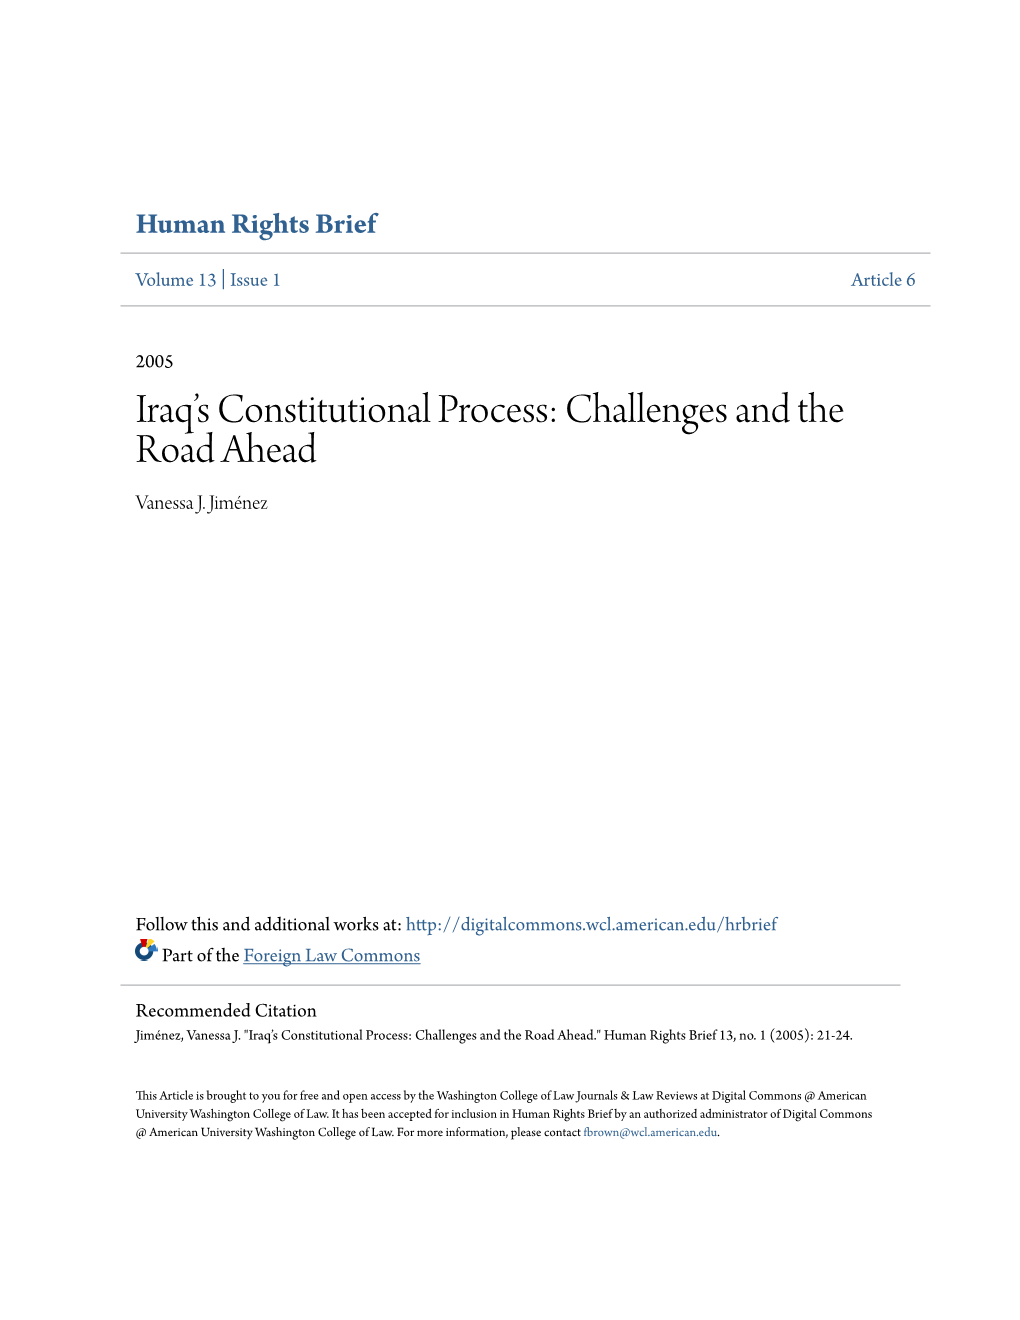 Iraq's Constitutional Process